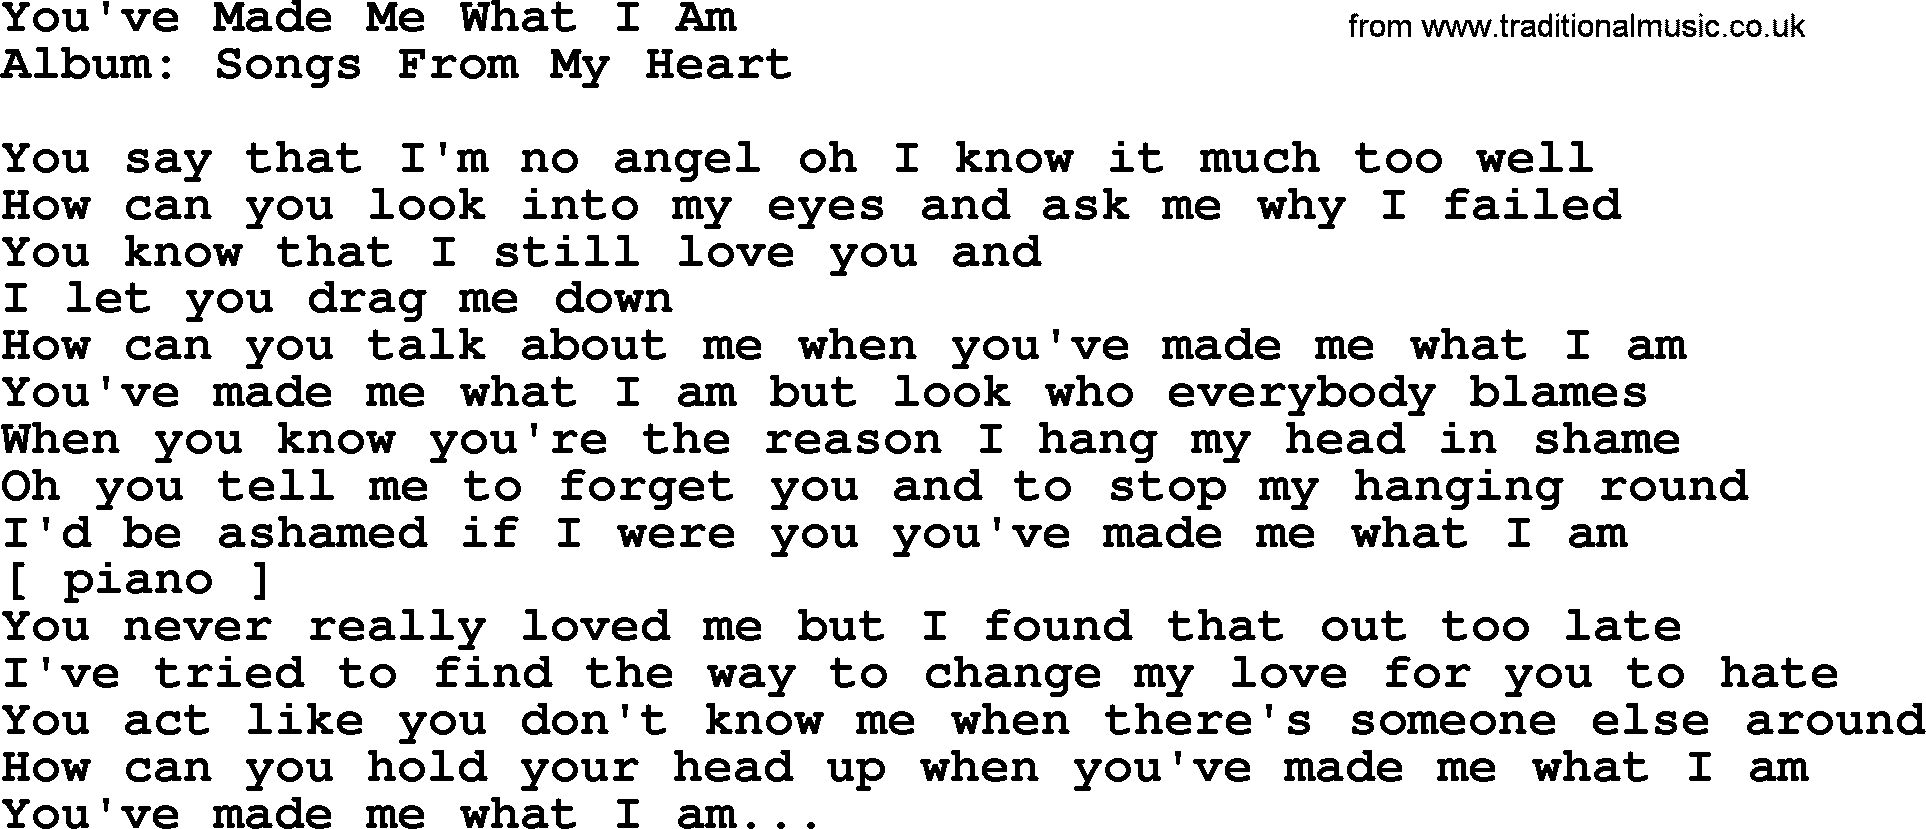 Loretta Lynn song: You've Made Me What I Am lyrics